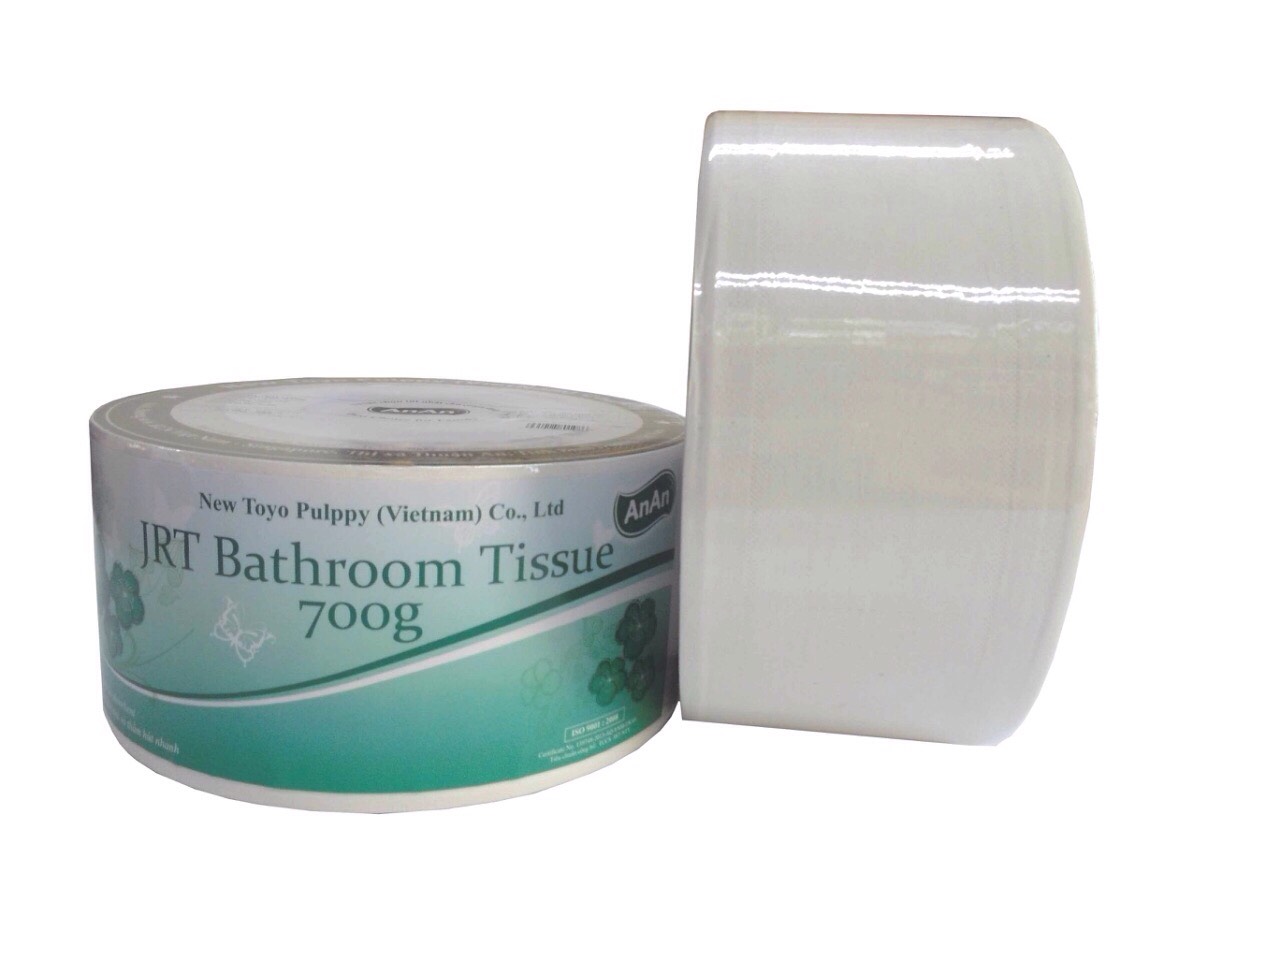 AnAn JRT Bathroom Tissue 1 Roll, 700g